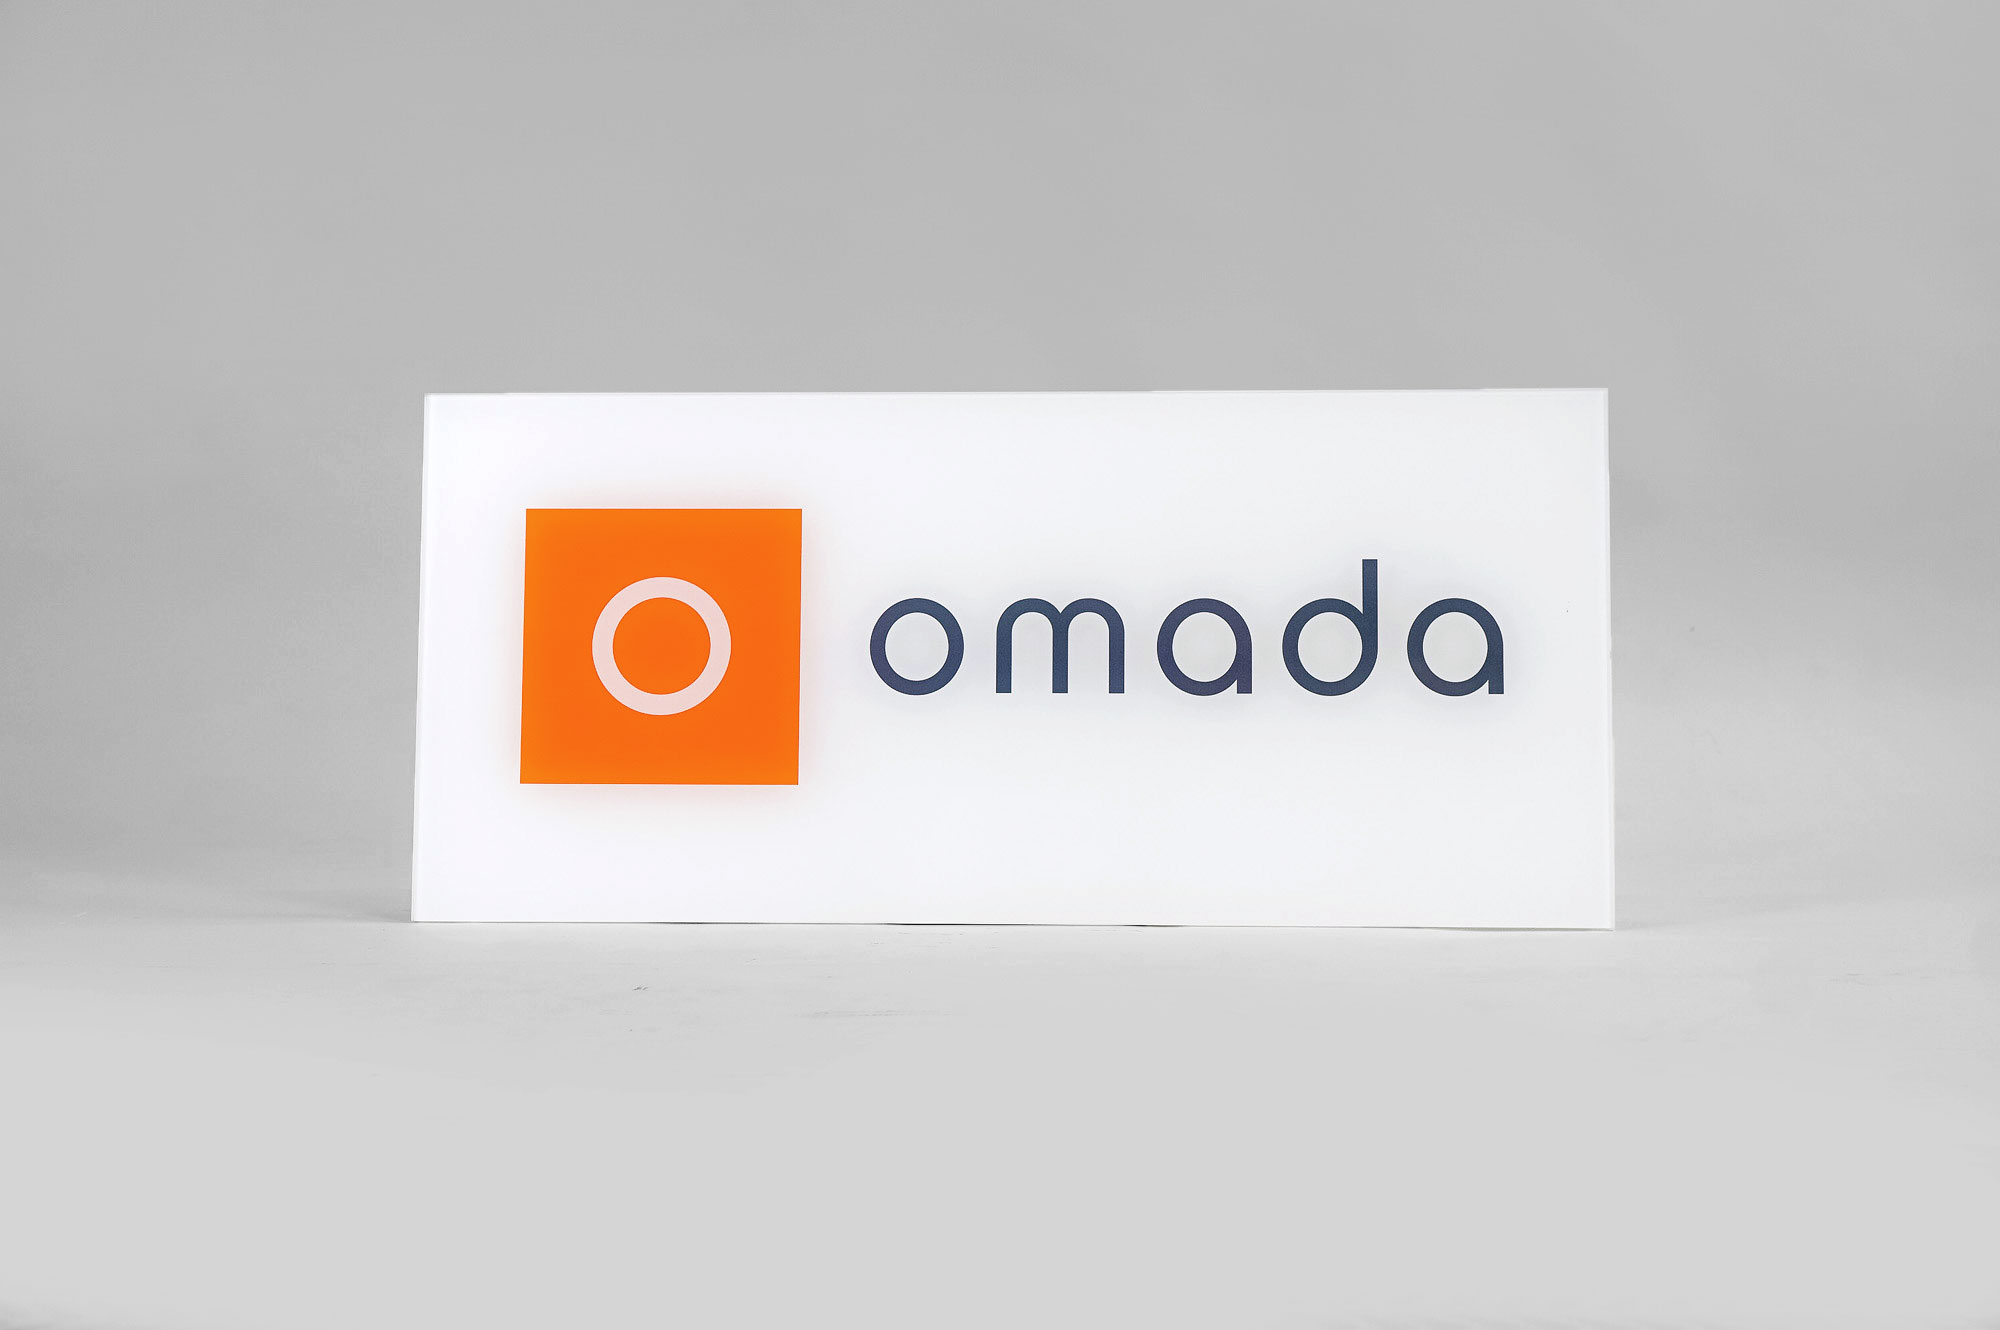 Glass-like, printed panel sign for Omada Health, a San Francisco based company pioneering digital behavioral medicine.